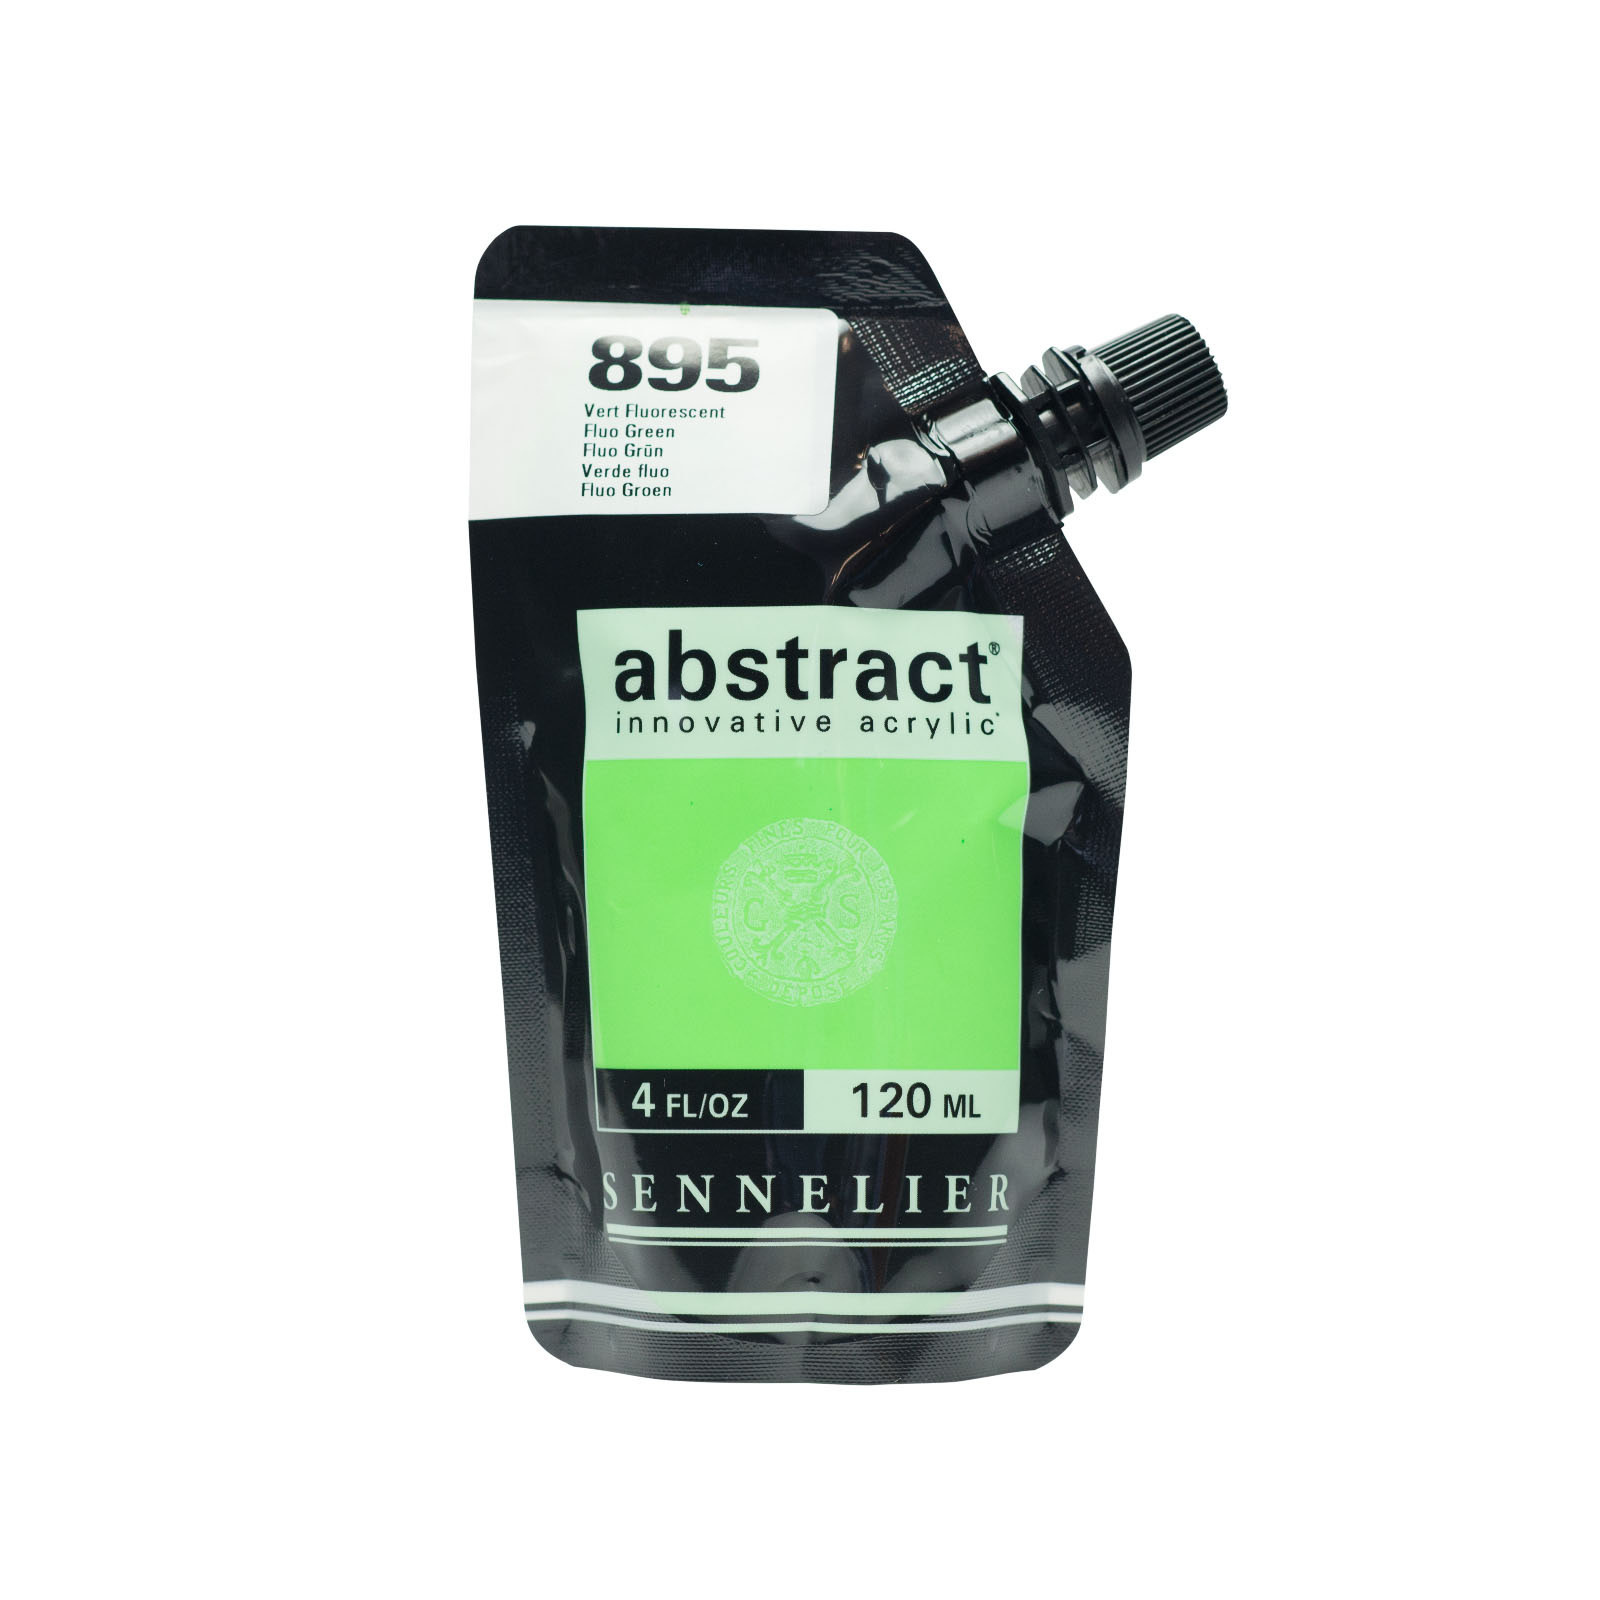 Sennelier Abstract Acrylics 120ML Fluorescent Green